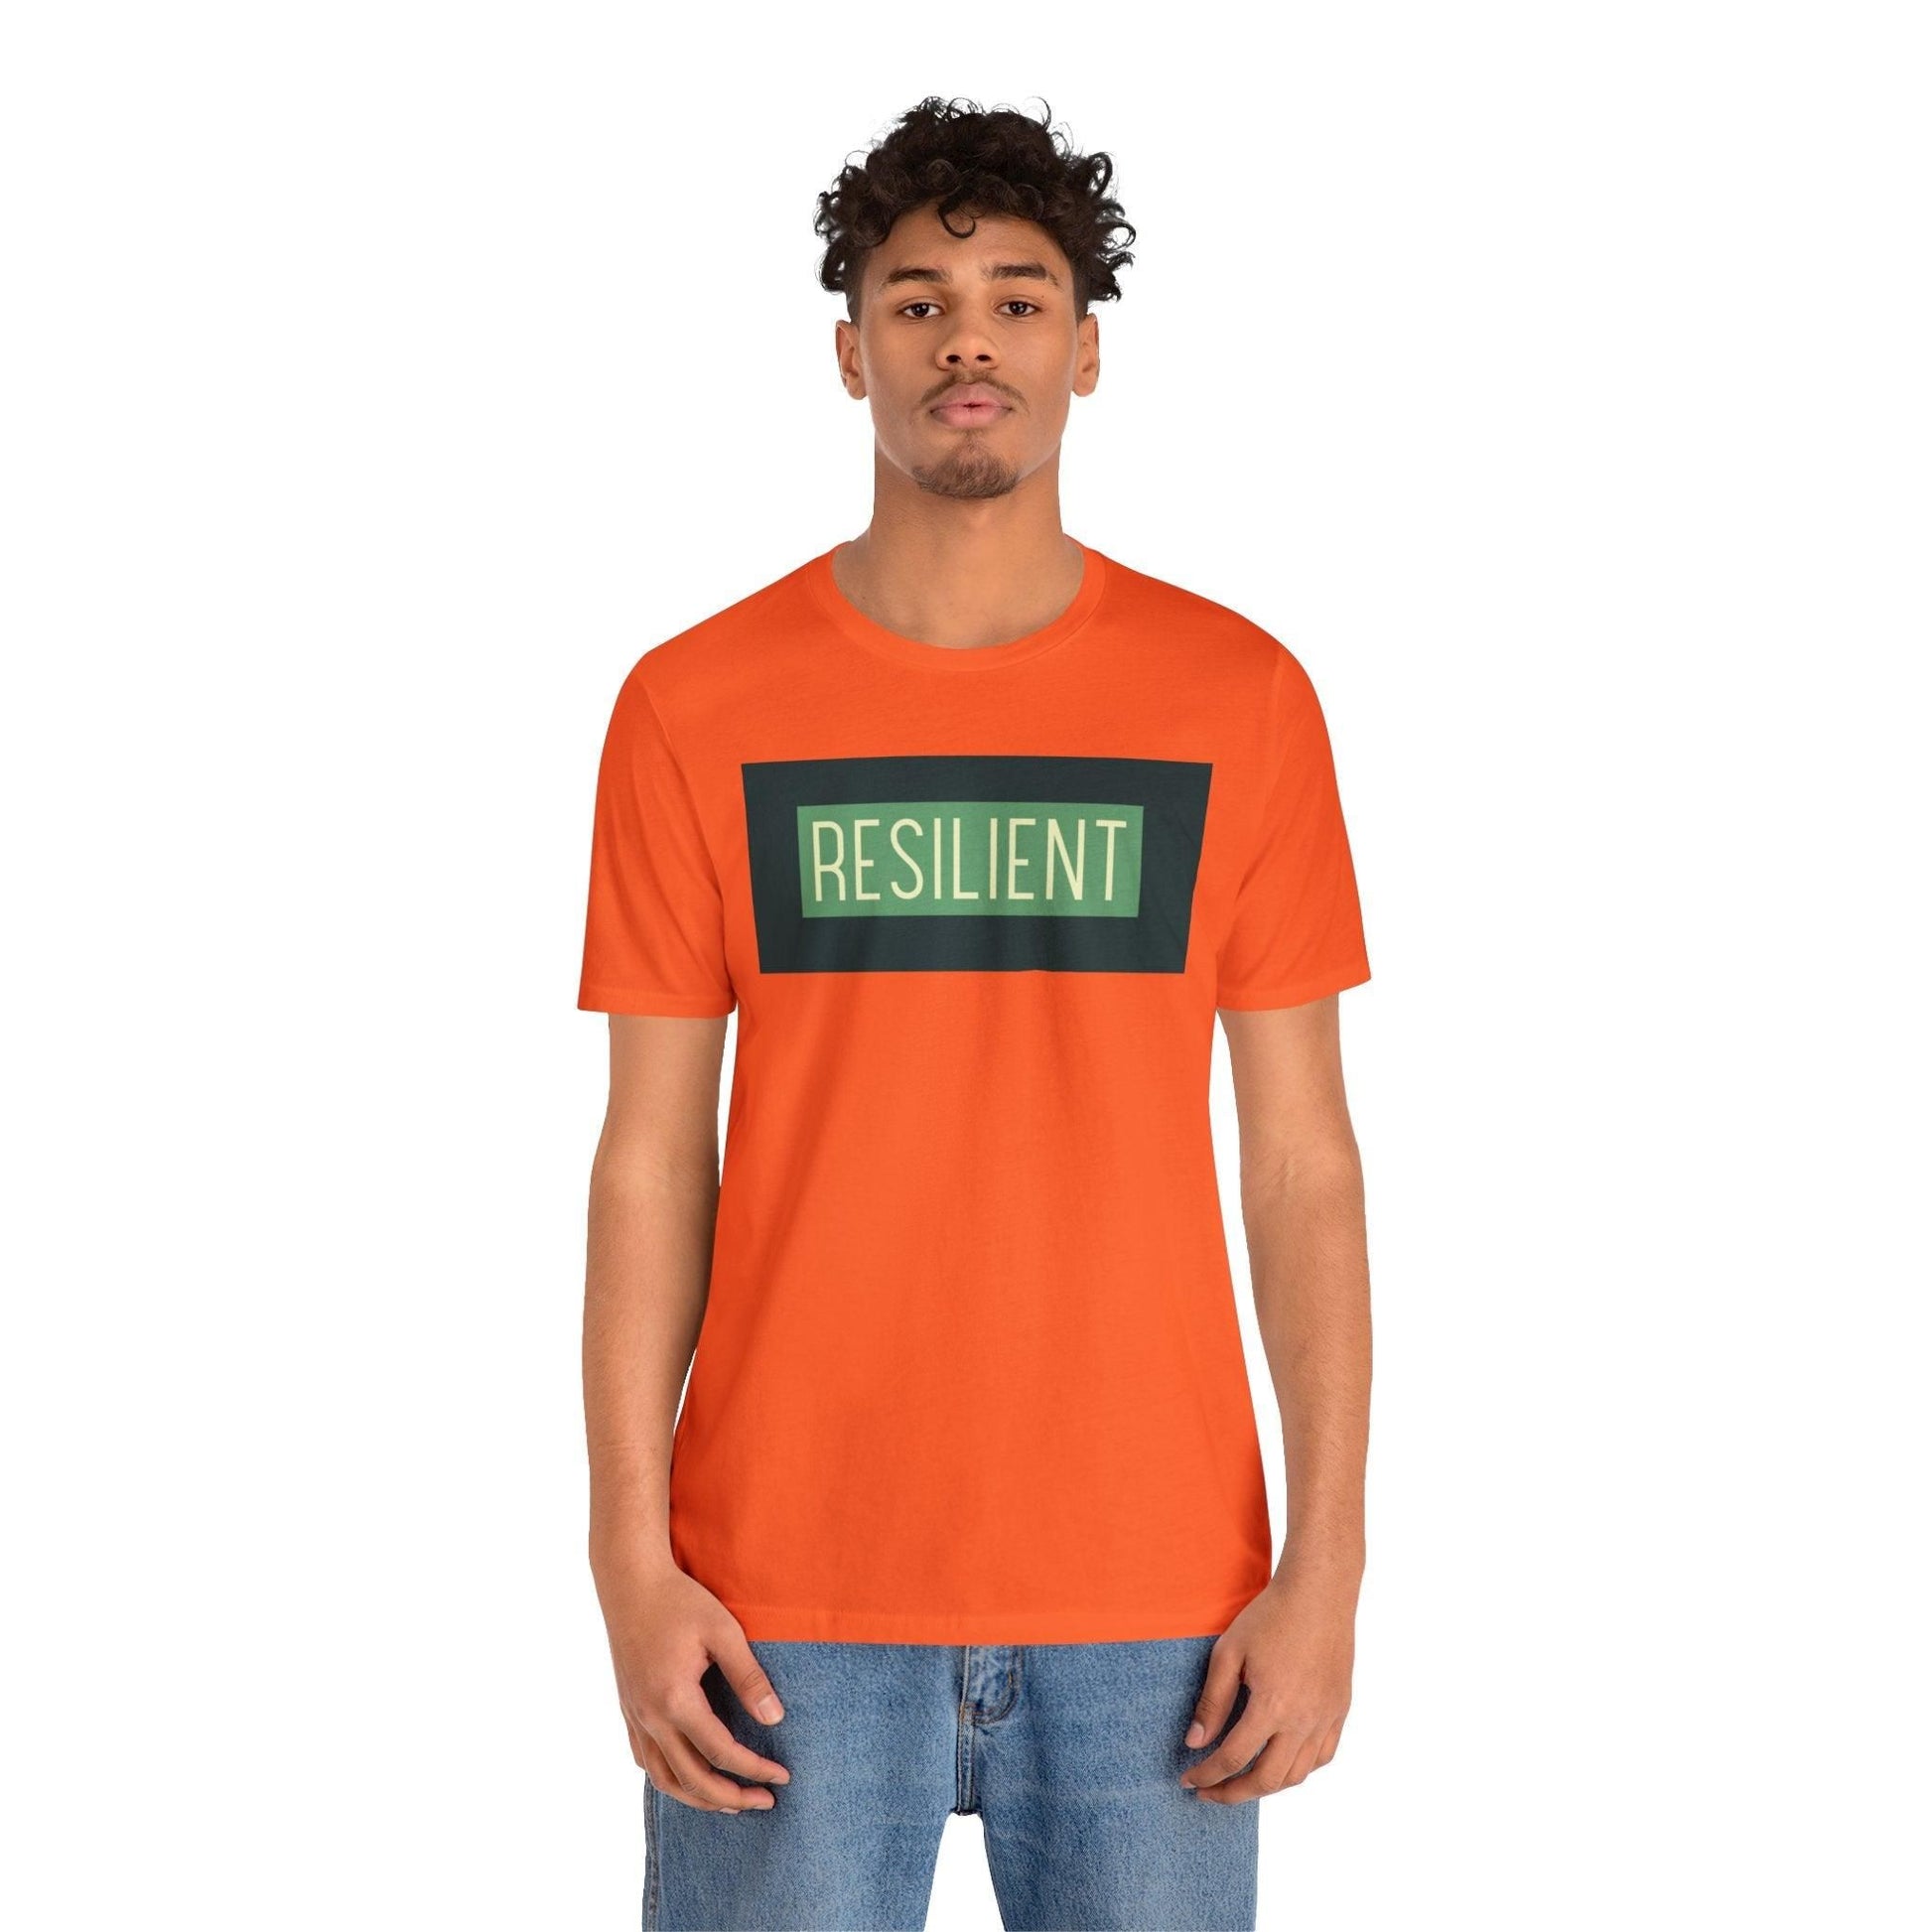 Resilient Unisex Tee T-Shirt Orange XS 